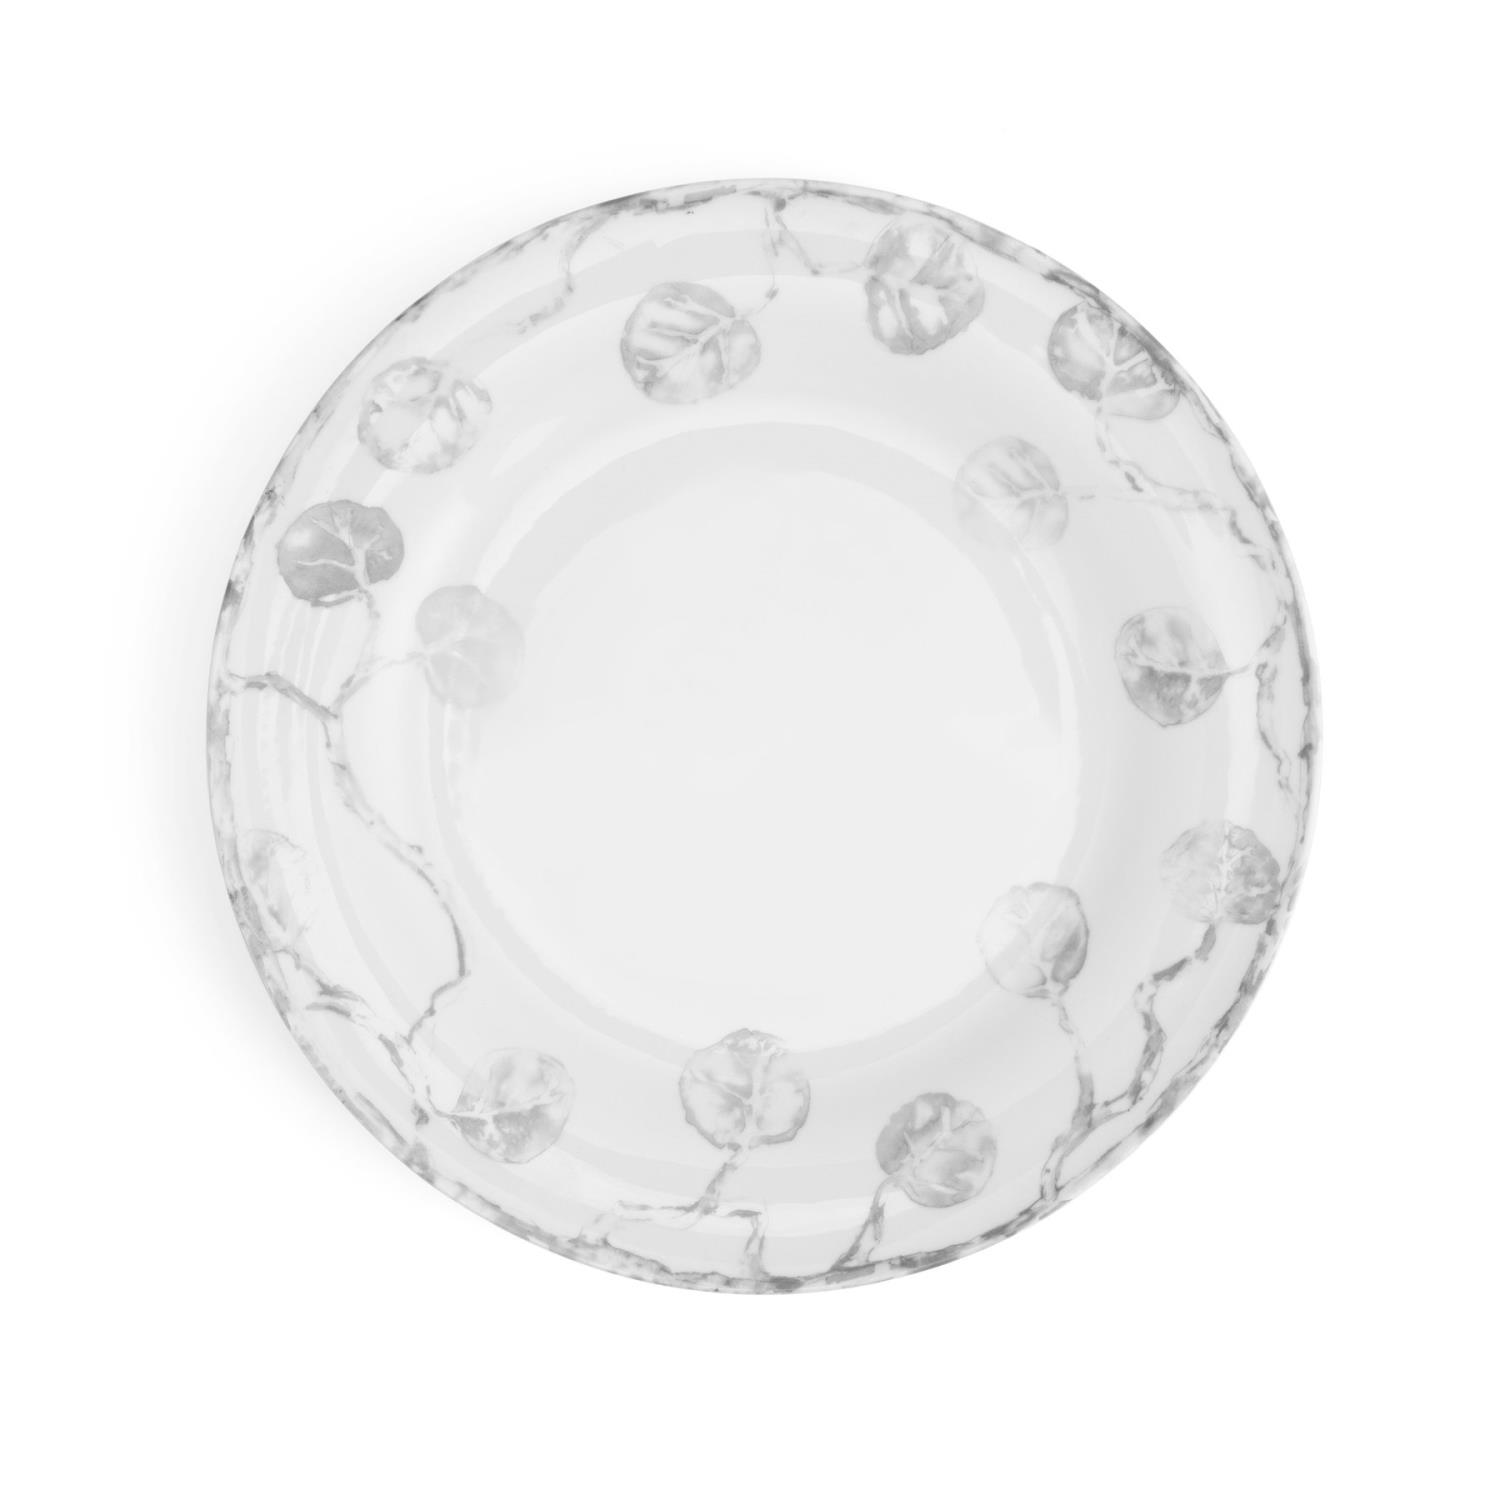 Michael Aram Botanical Leaf Dinner Plate 314050